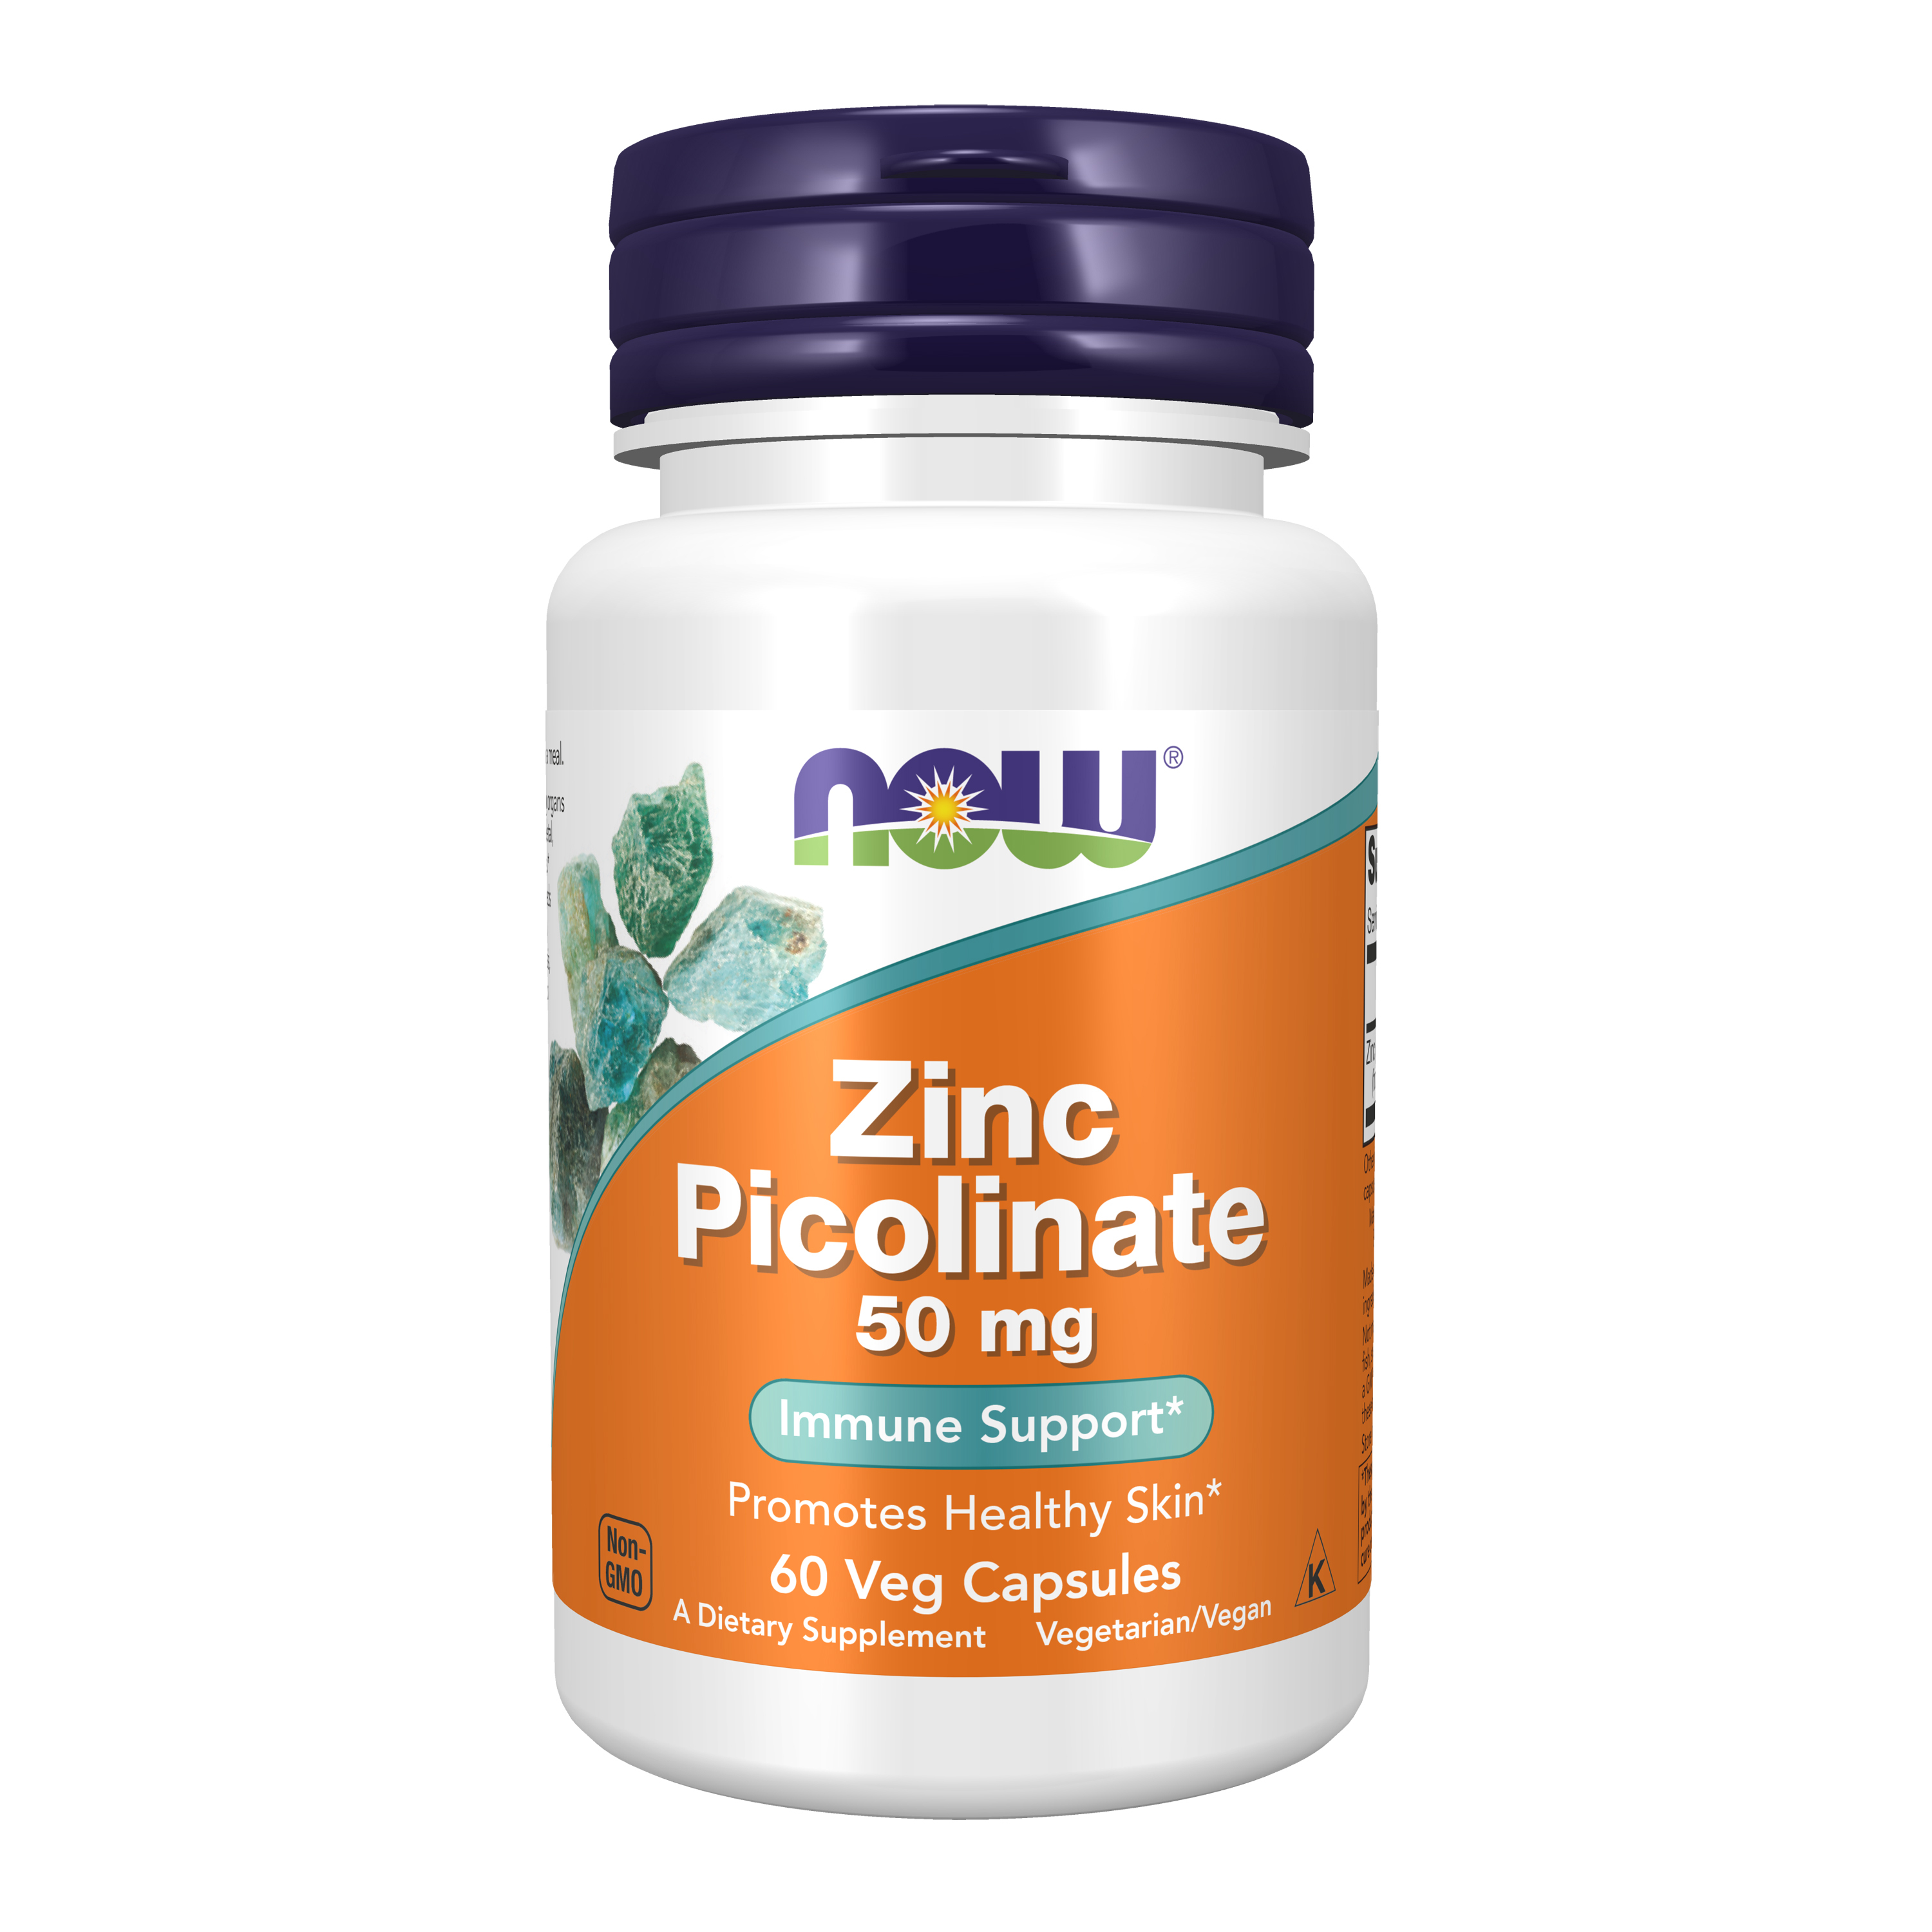 Zinc Picolinate 50 mg - 60 Veg Capsules - image 1 of 9